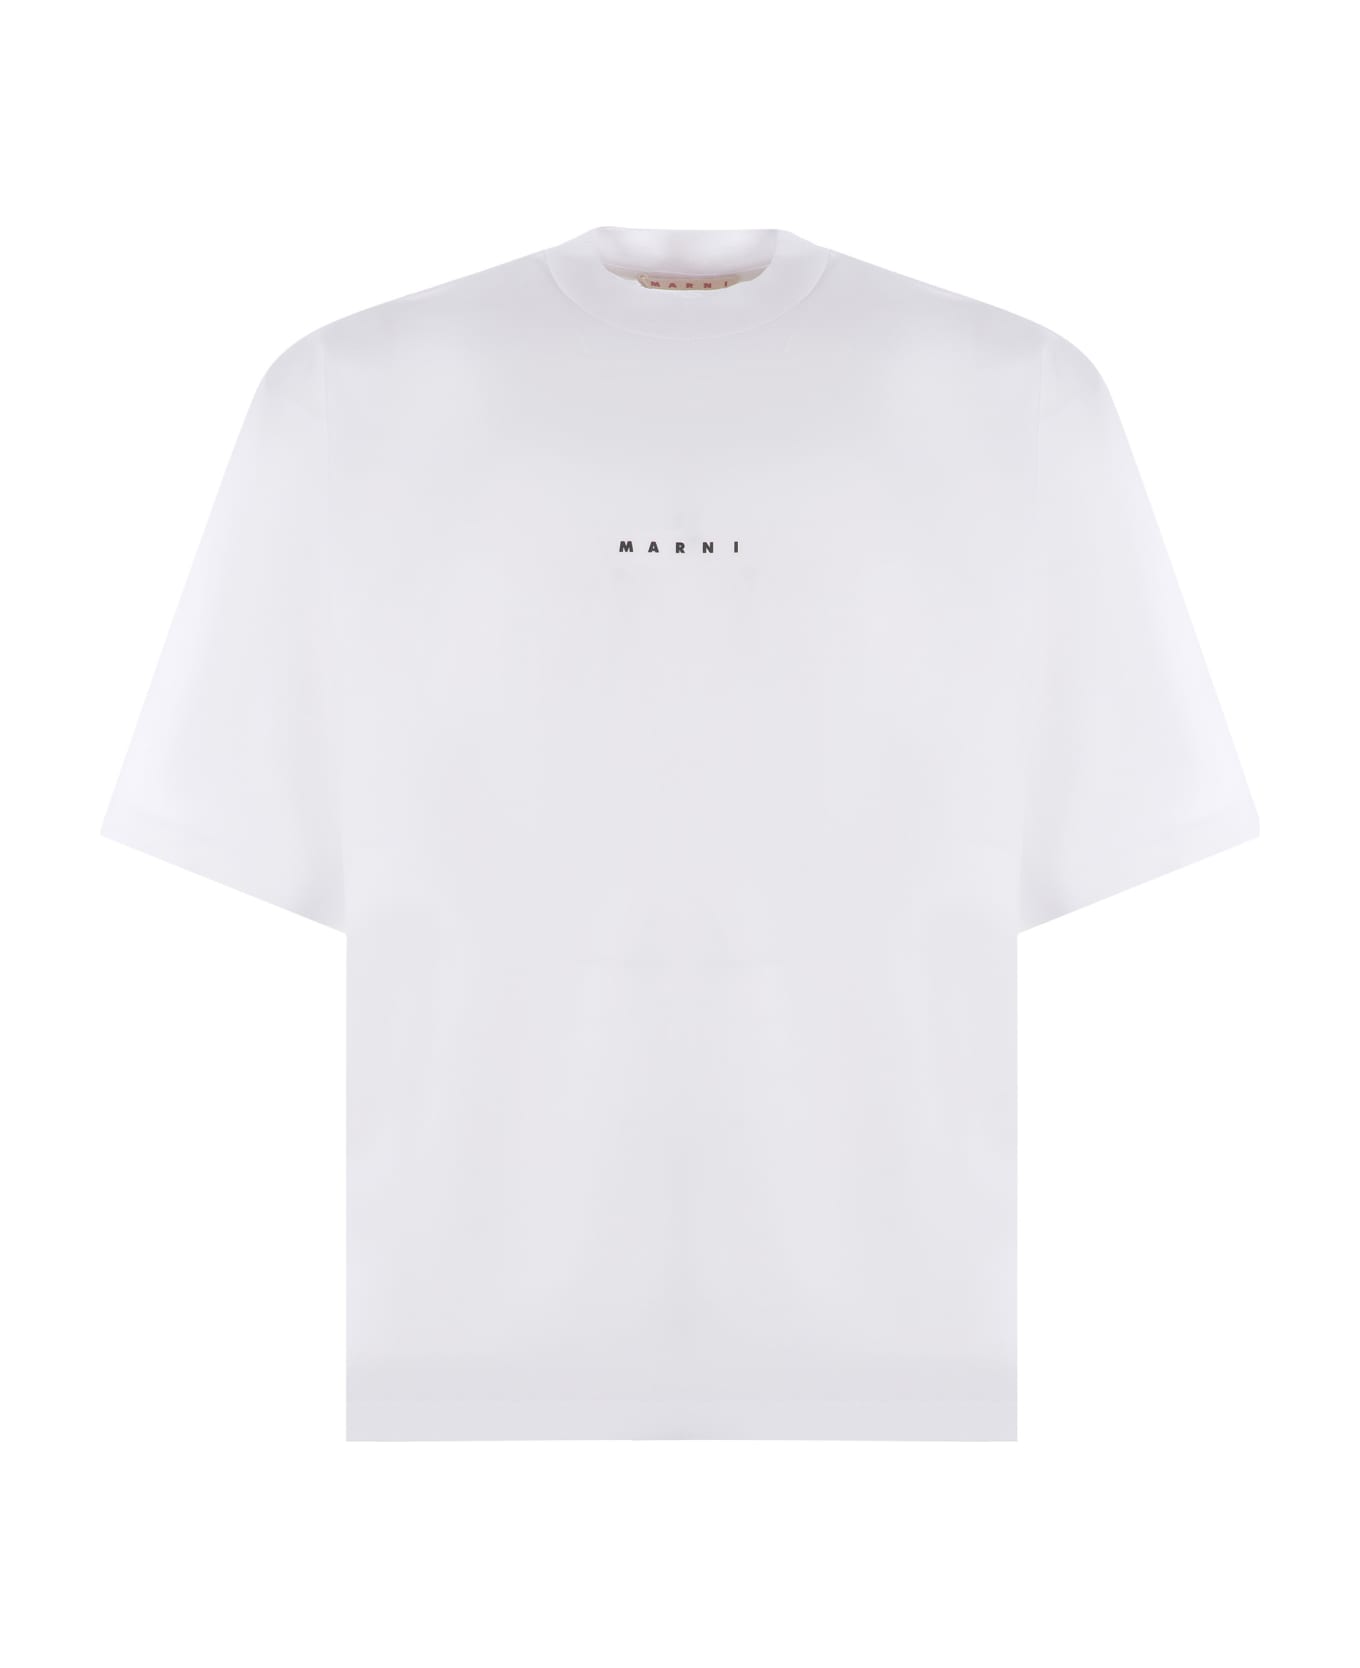 Marni T-shirt Marni Made Of Cotton - Bianco